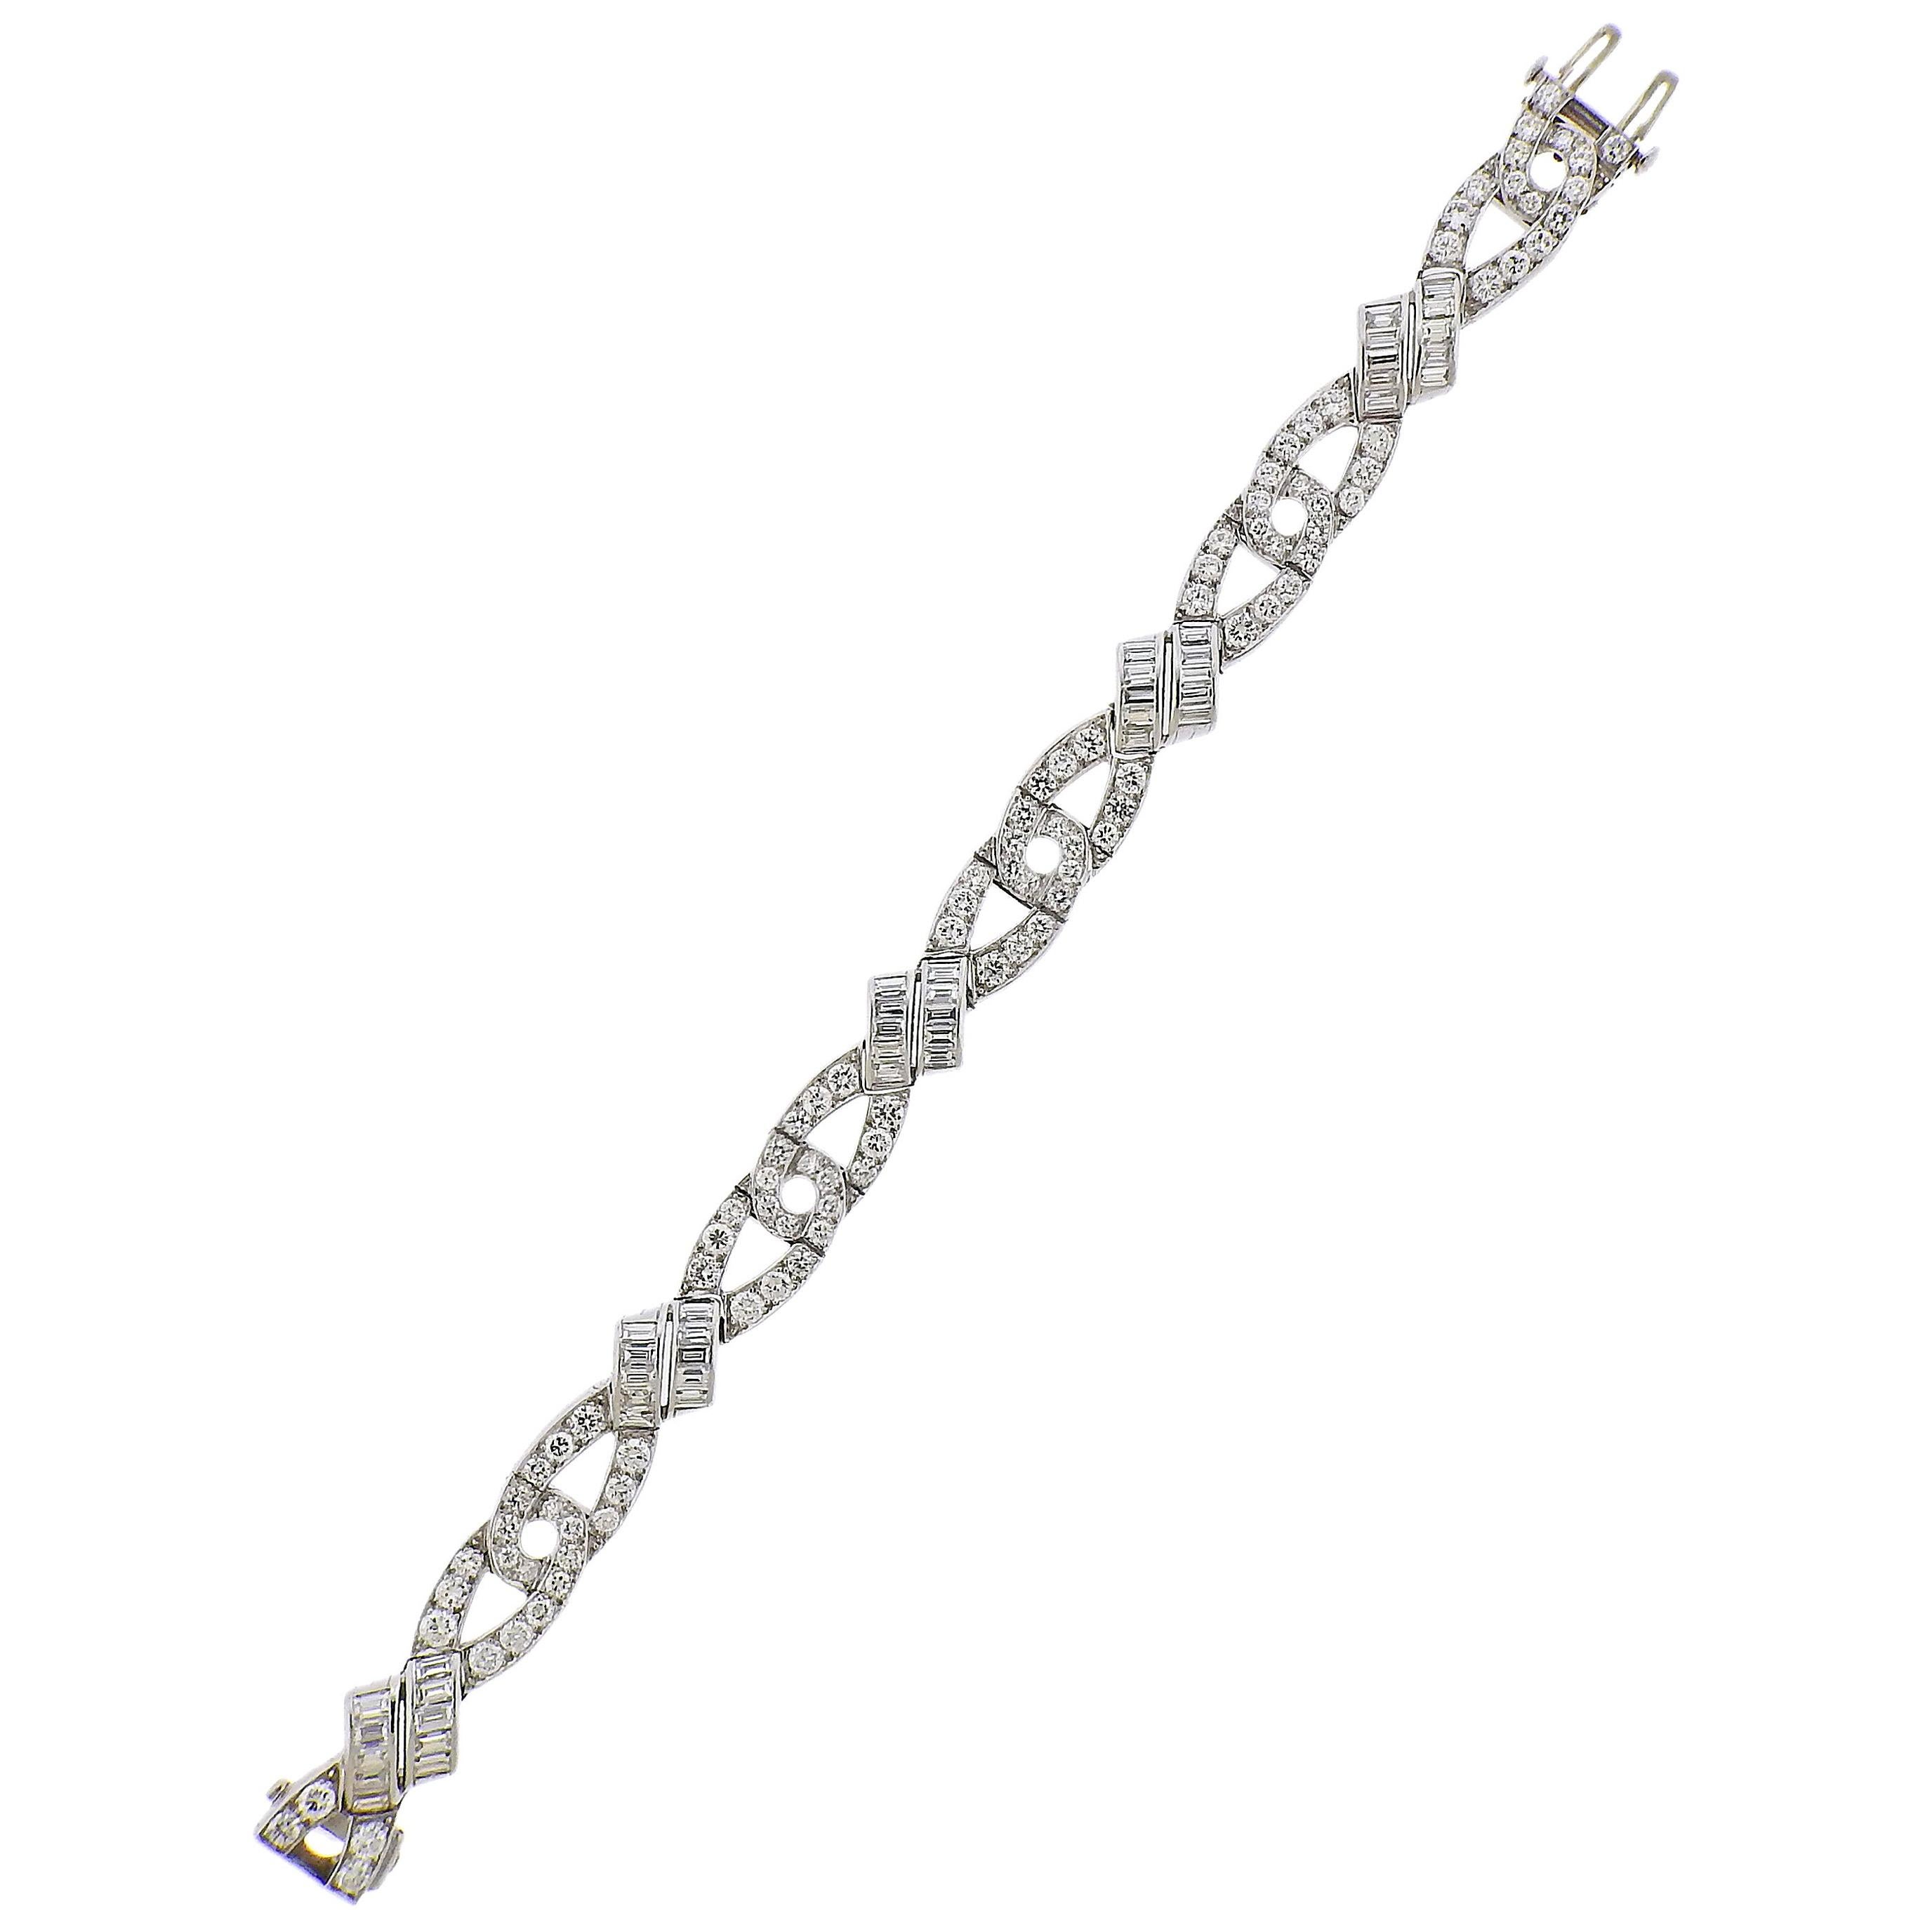 Exquisite Oscar Heyman Bros. Diamond Platinum Bracelet